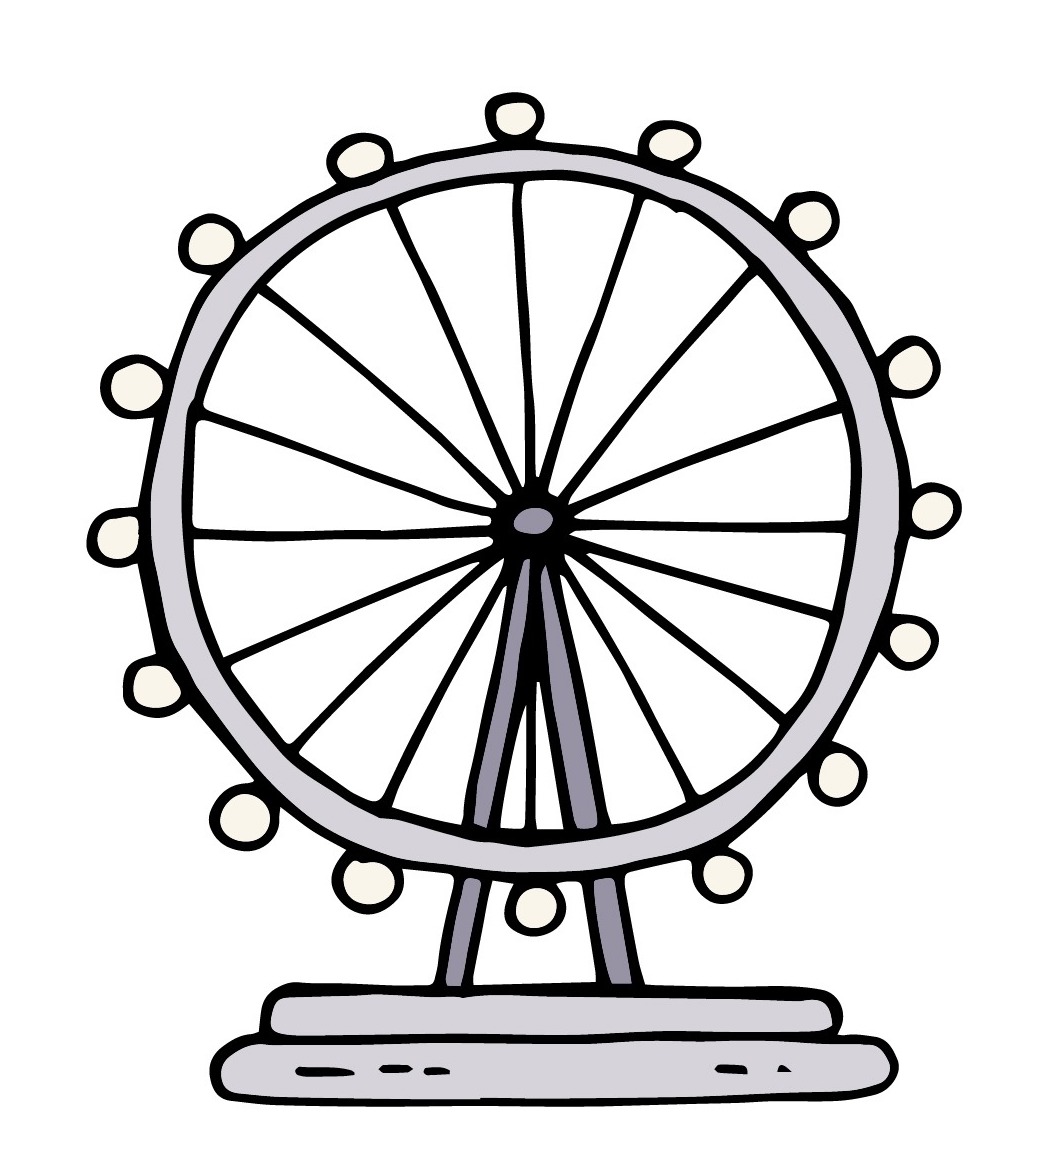 roda gigante